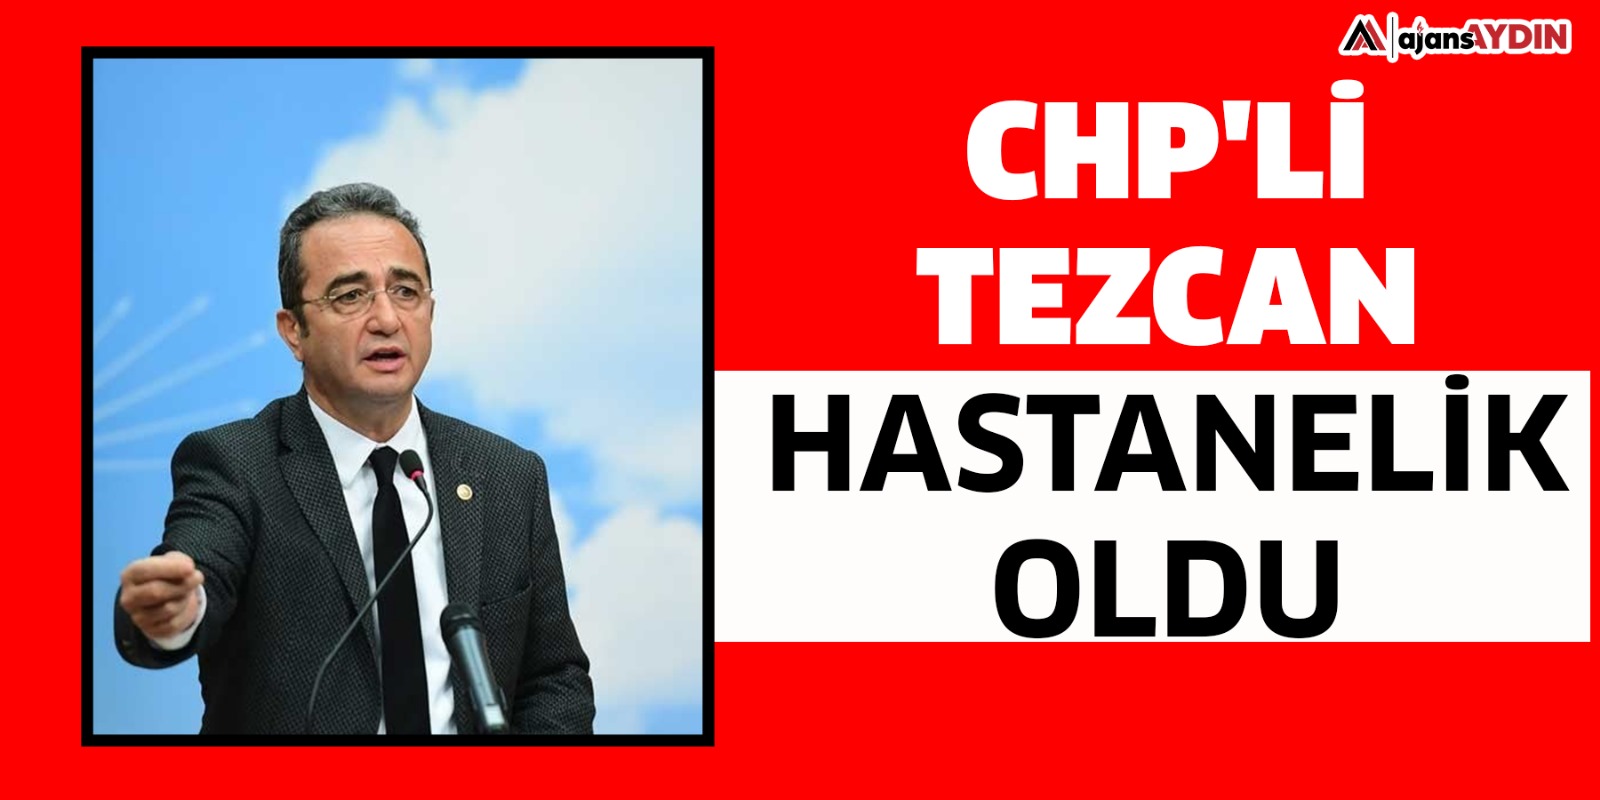 CHP'li Tezcan hastanelik oldu!